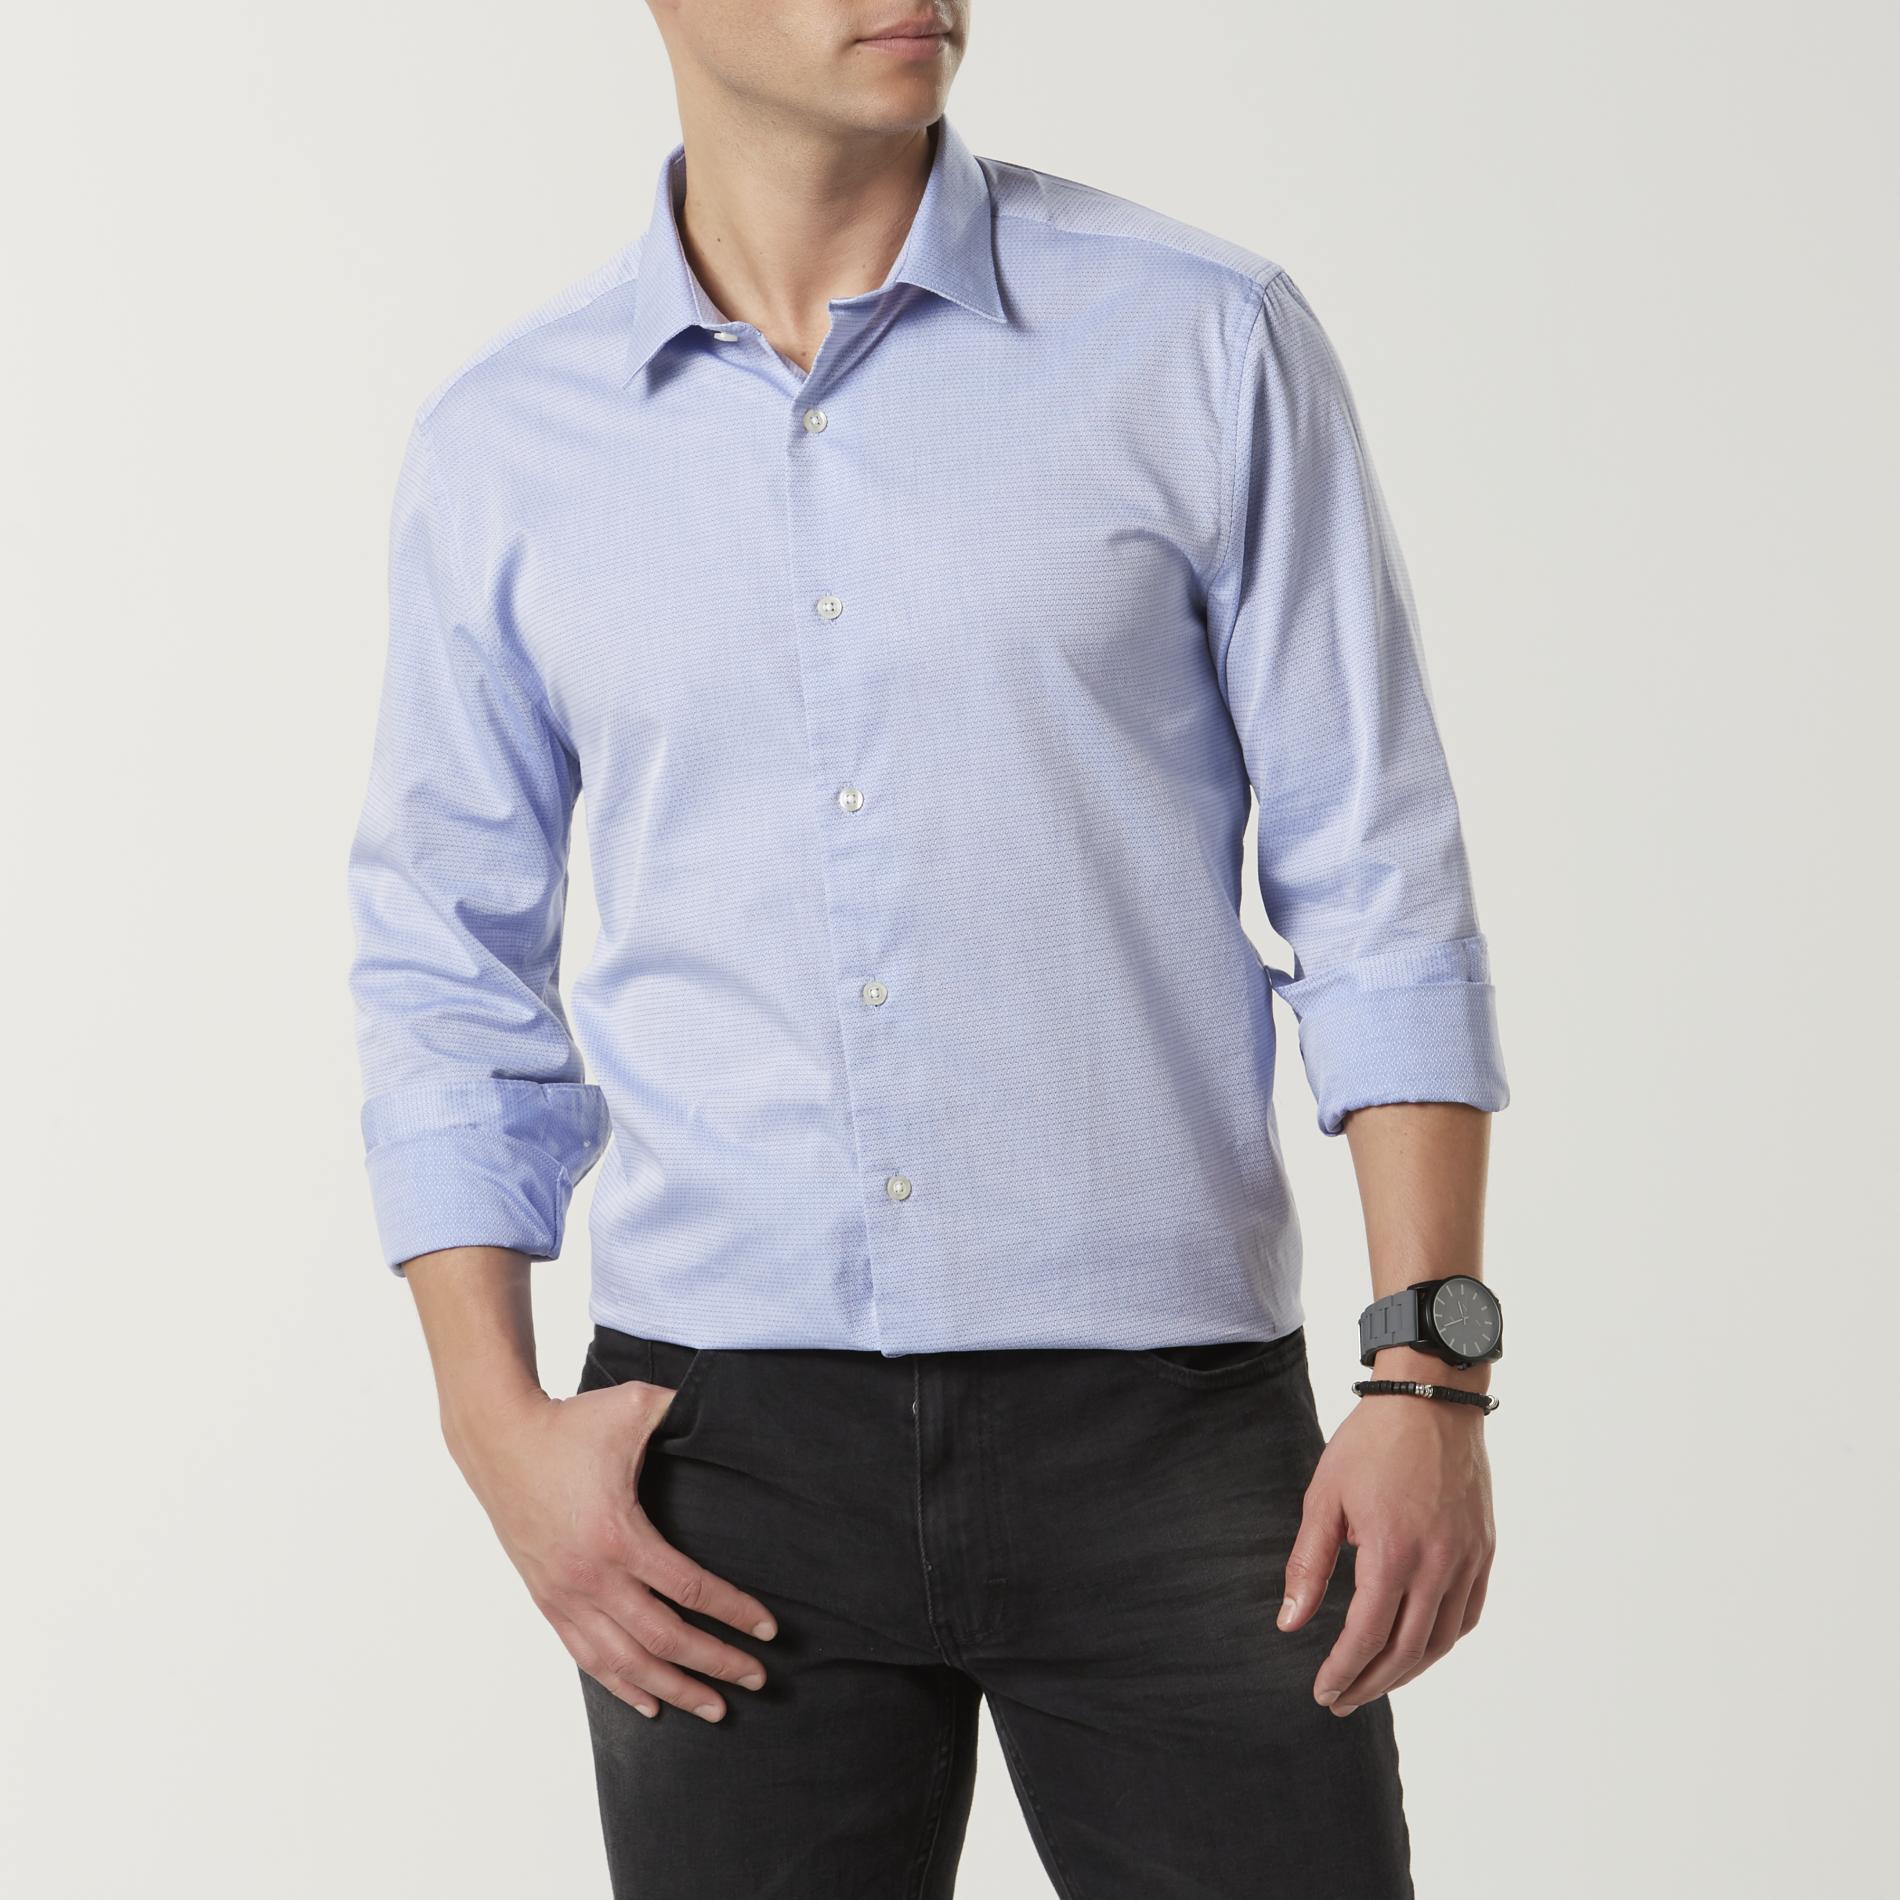 Structure Men's Slim Fit Dress Shirt - Geometric